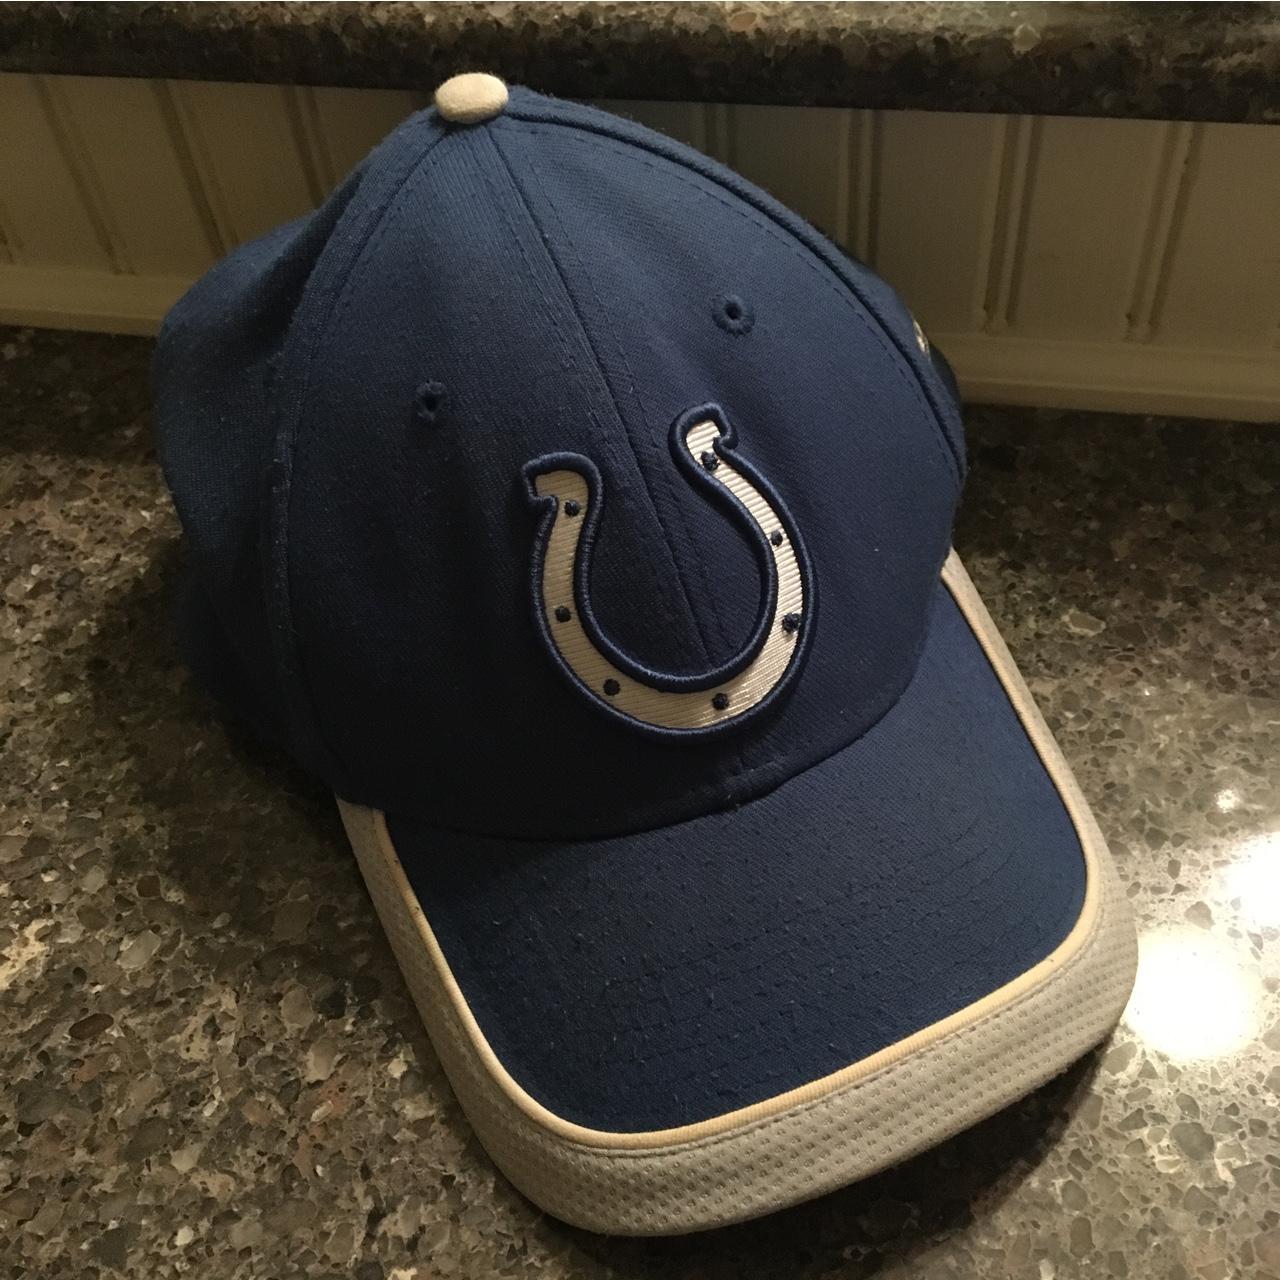 New Era x Indianapolis Colts hat! 